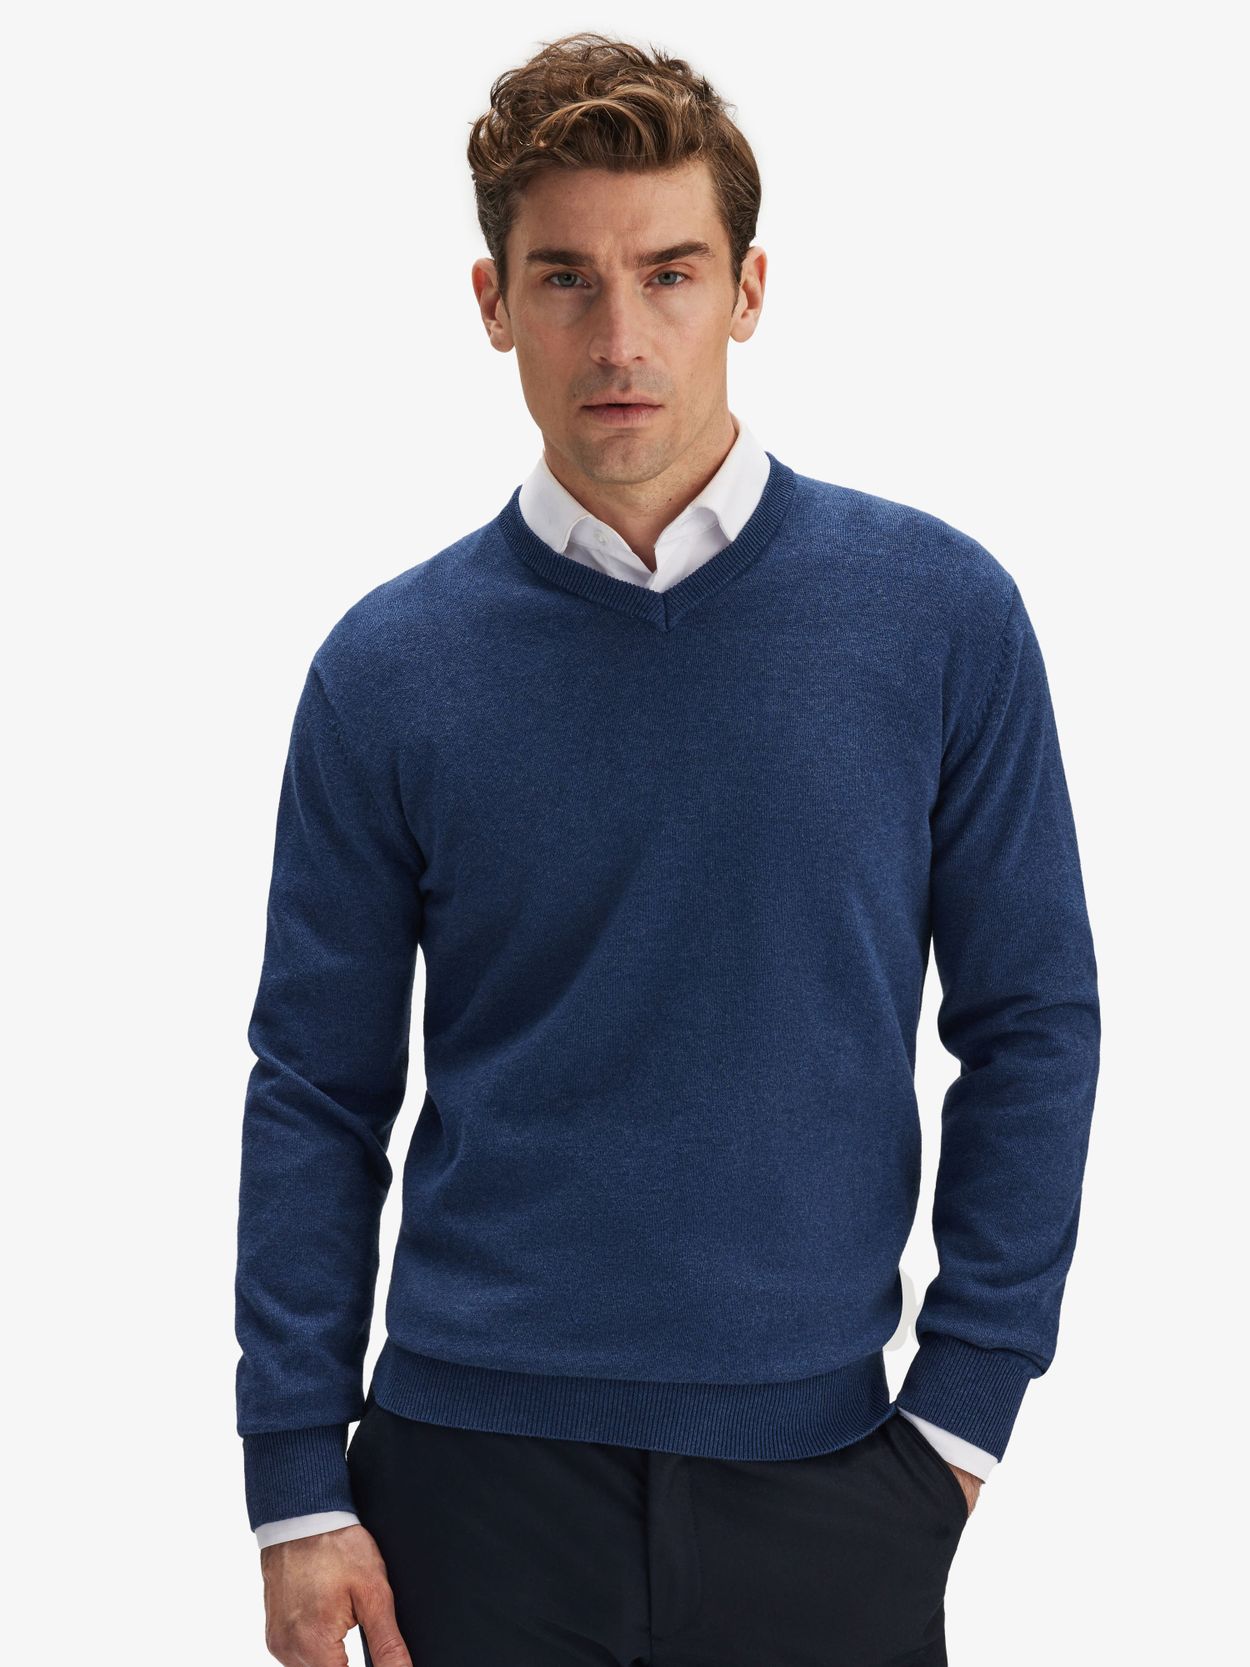 Blue Sweater Cotton